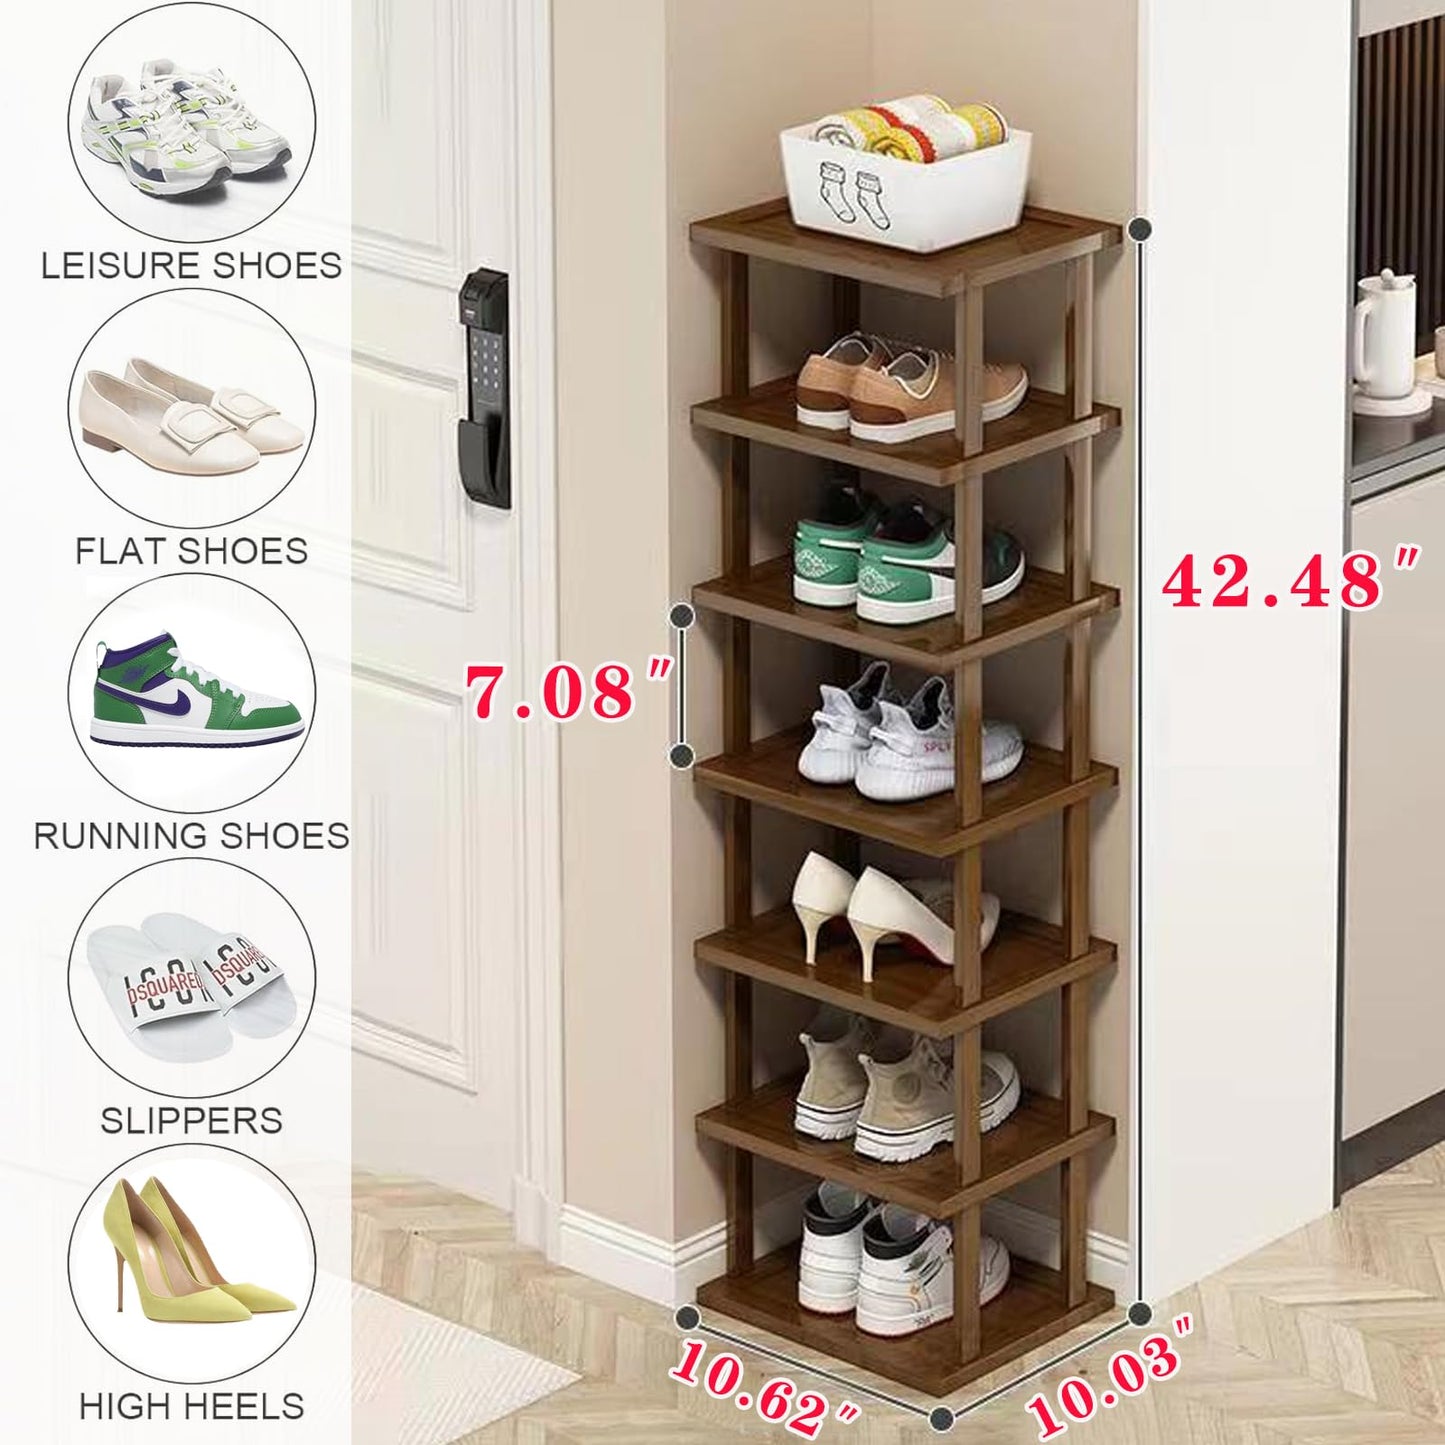 Vertical Shoe Rack - Tall Narrow Shoe Rack Organizer for Small Spaces,7 Tier Bamboo Shoen Shelf for Entryway,Closet,Corner,Doorway,Skinny Shoe Shelf Space Saving Shoe Storage,Free Stackable DIY…